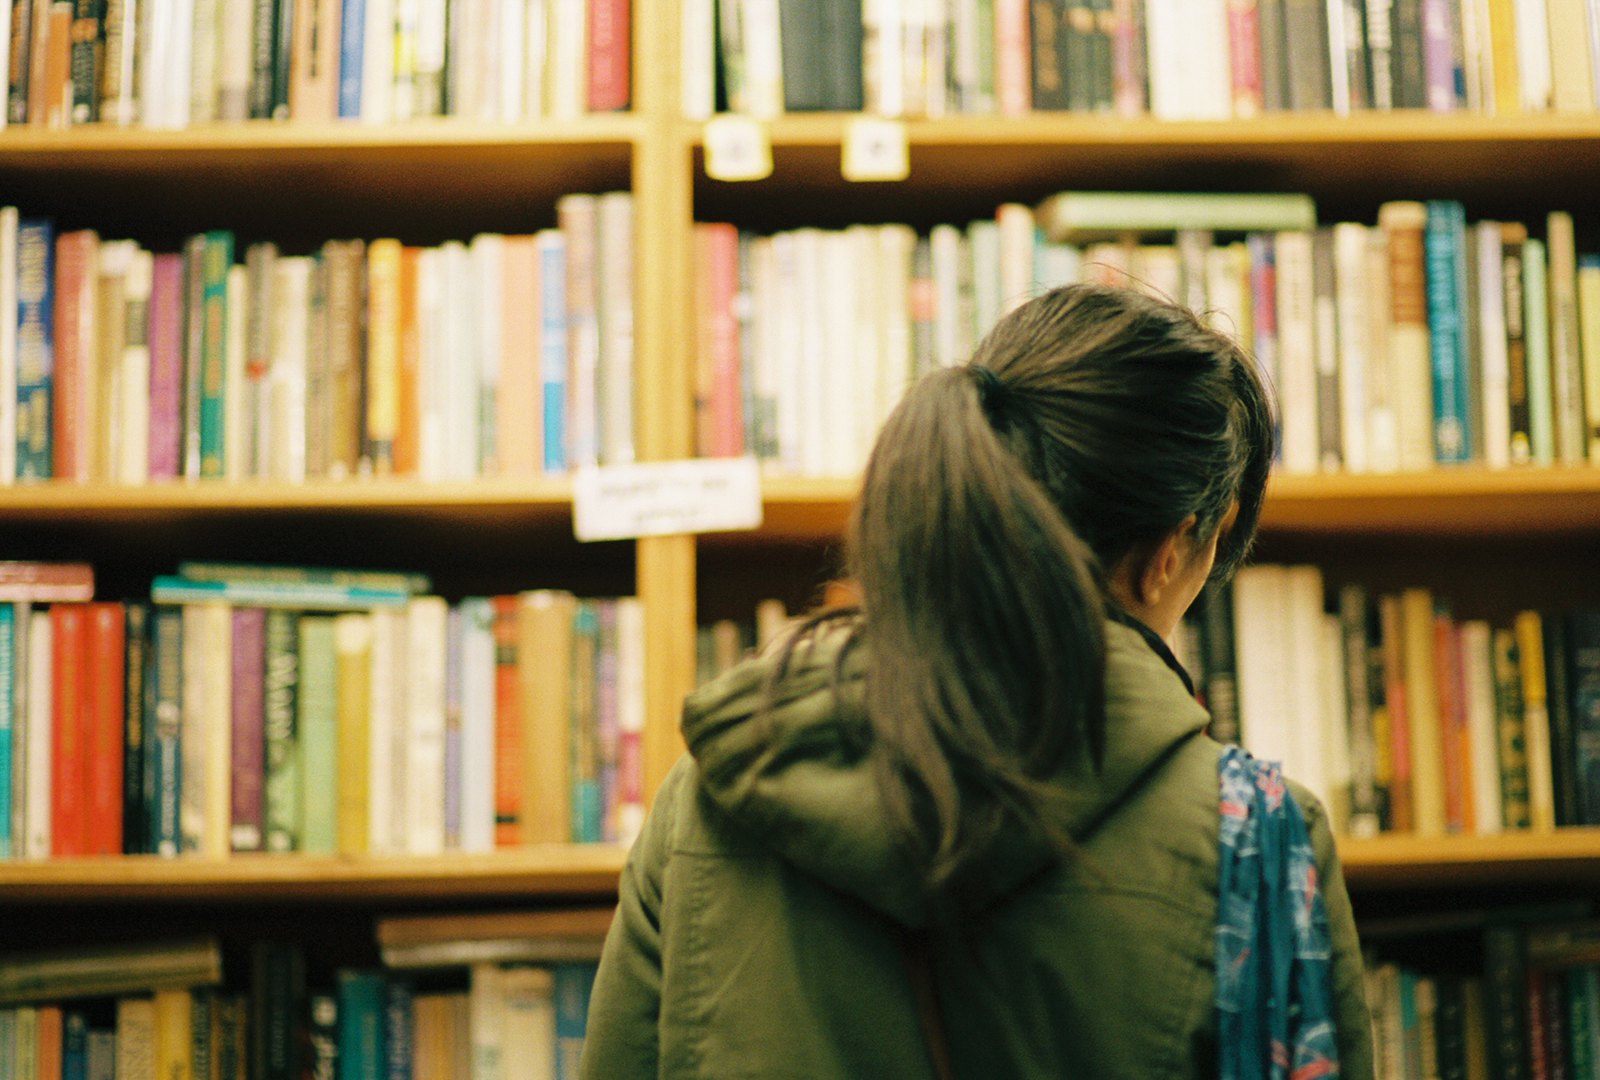 A girl peruses shelves of books